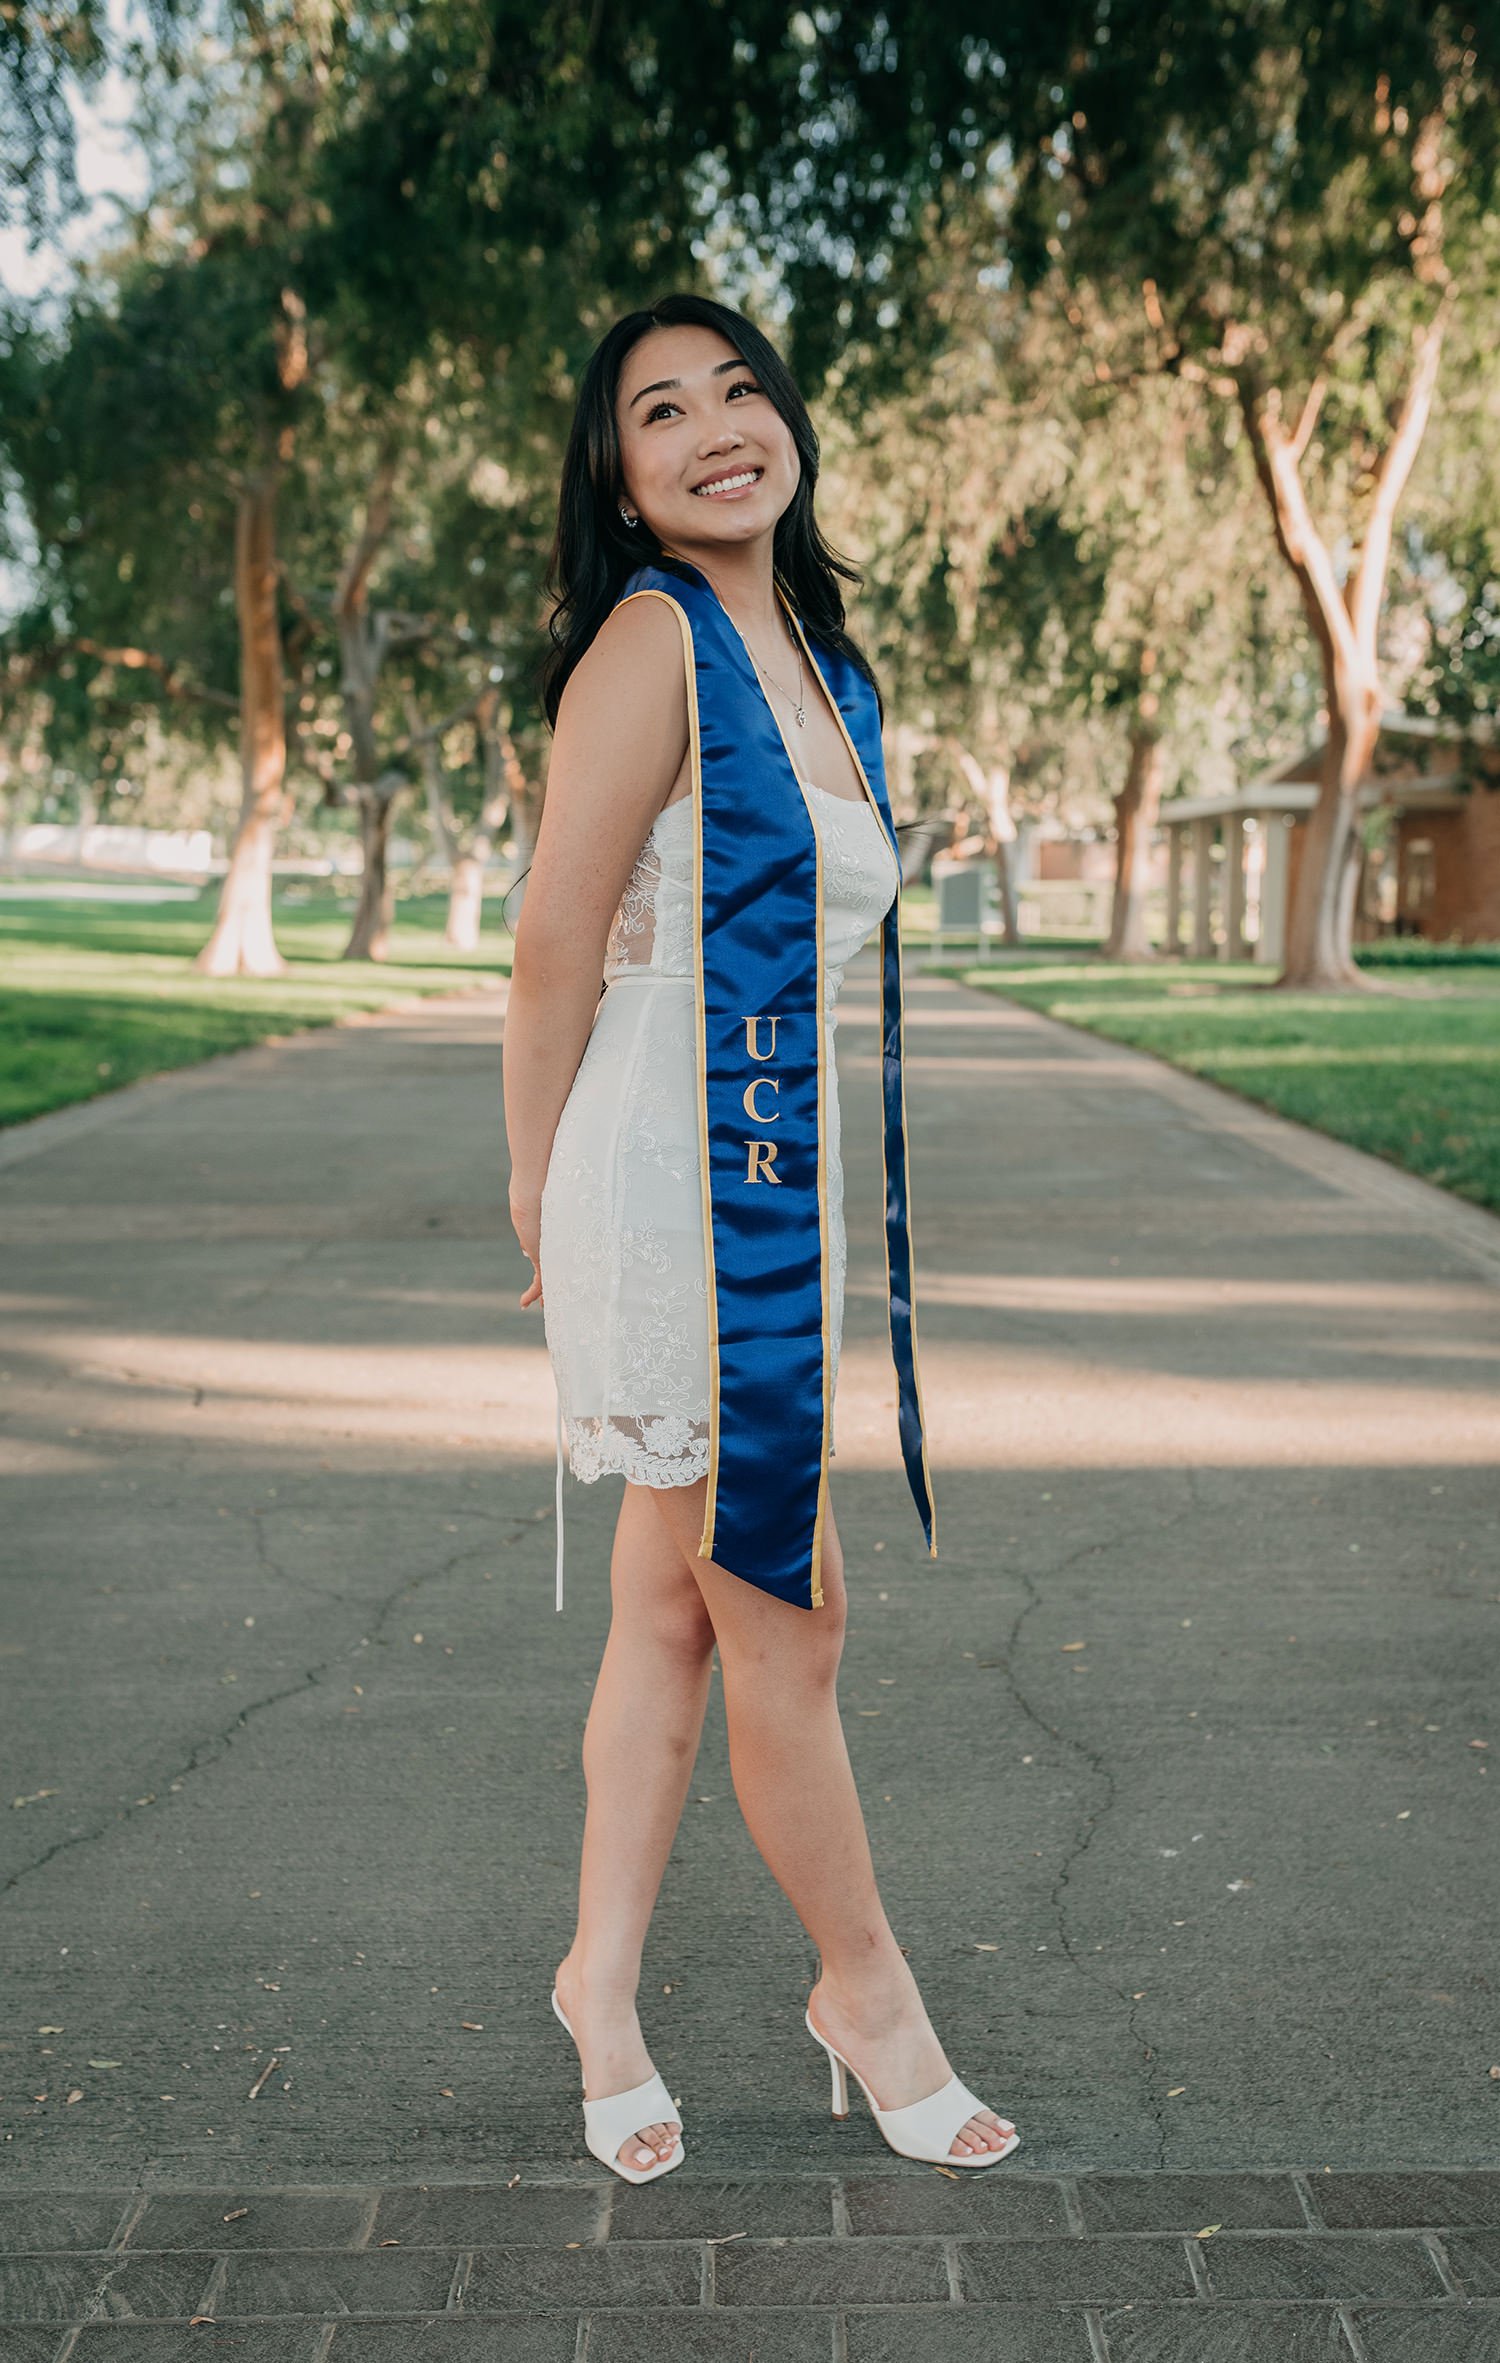 ucr-graduation-portrait-riverside-california-photographer-3.jpg